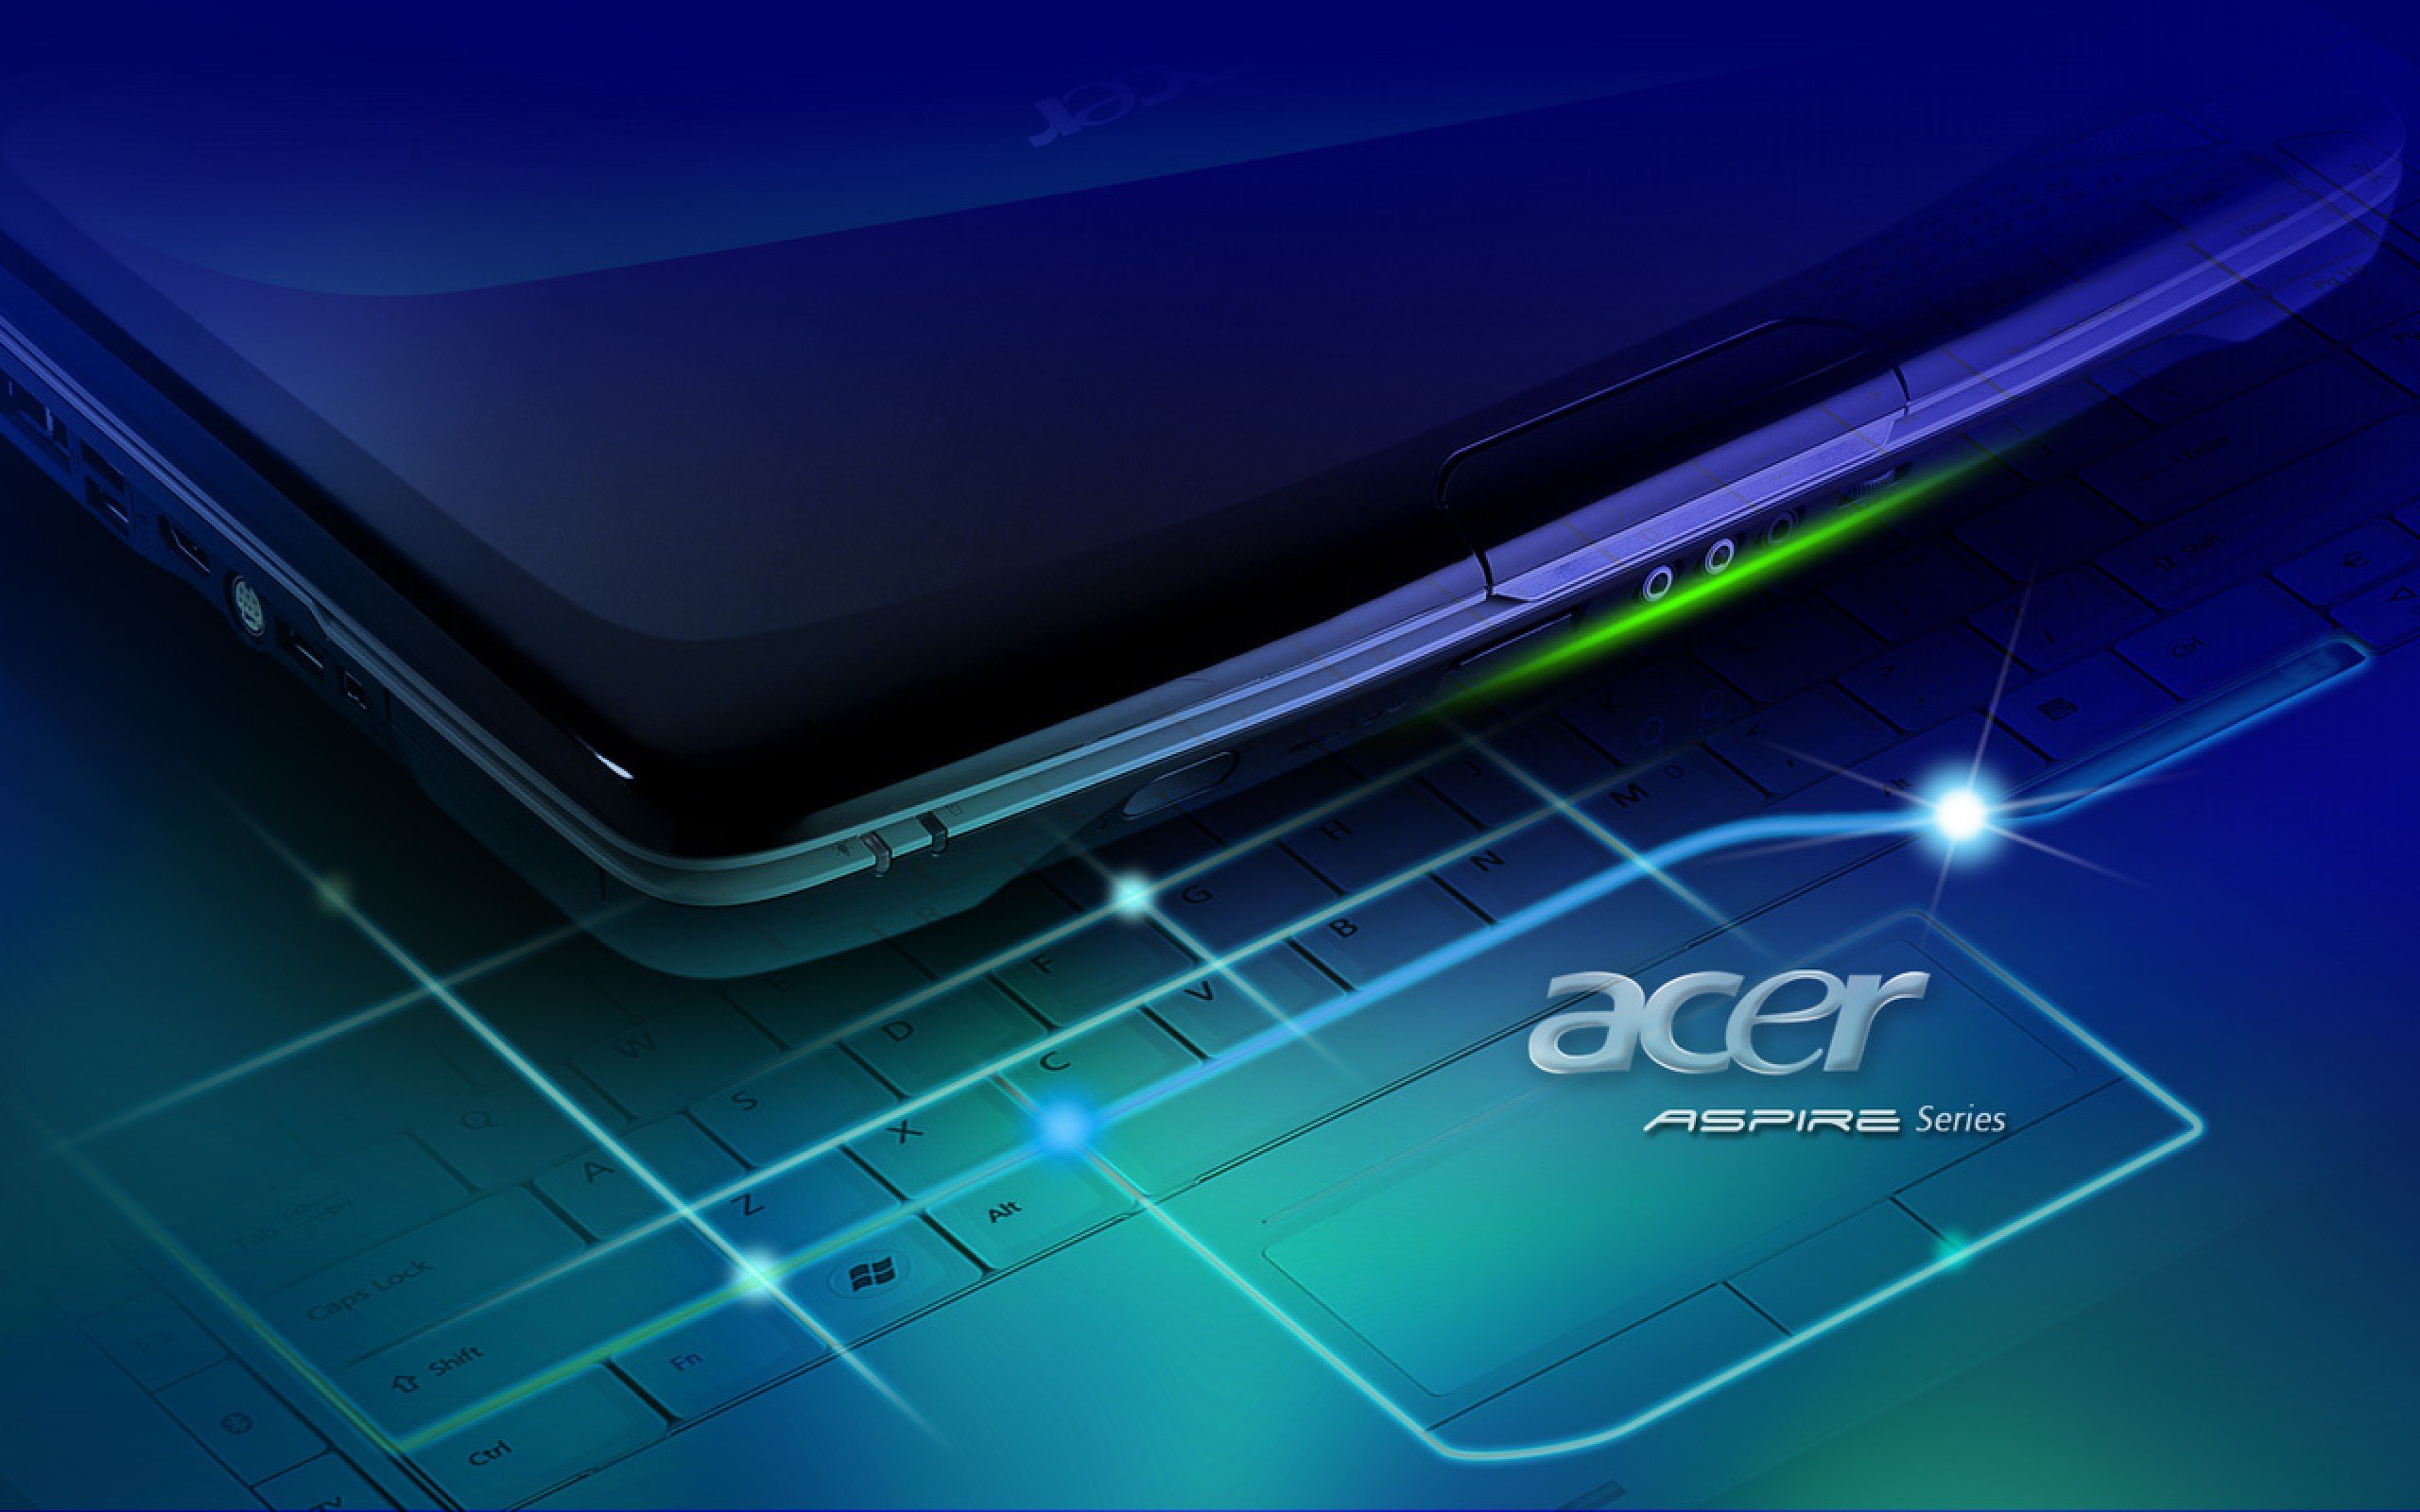 Acer Aspire 1920x1080